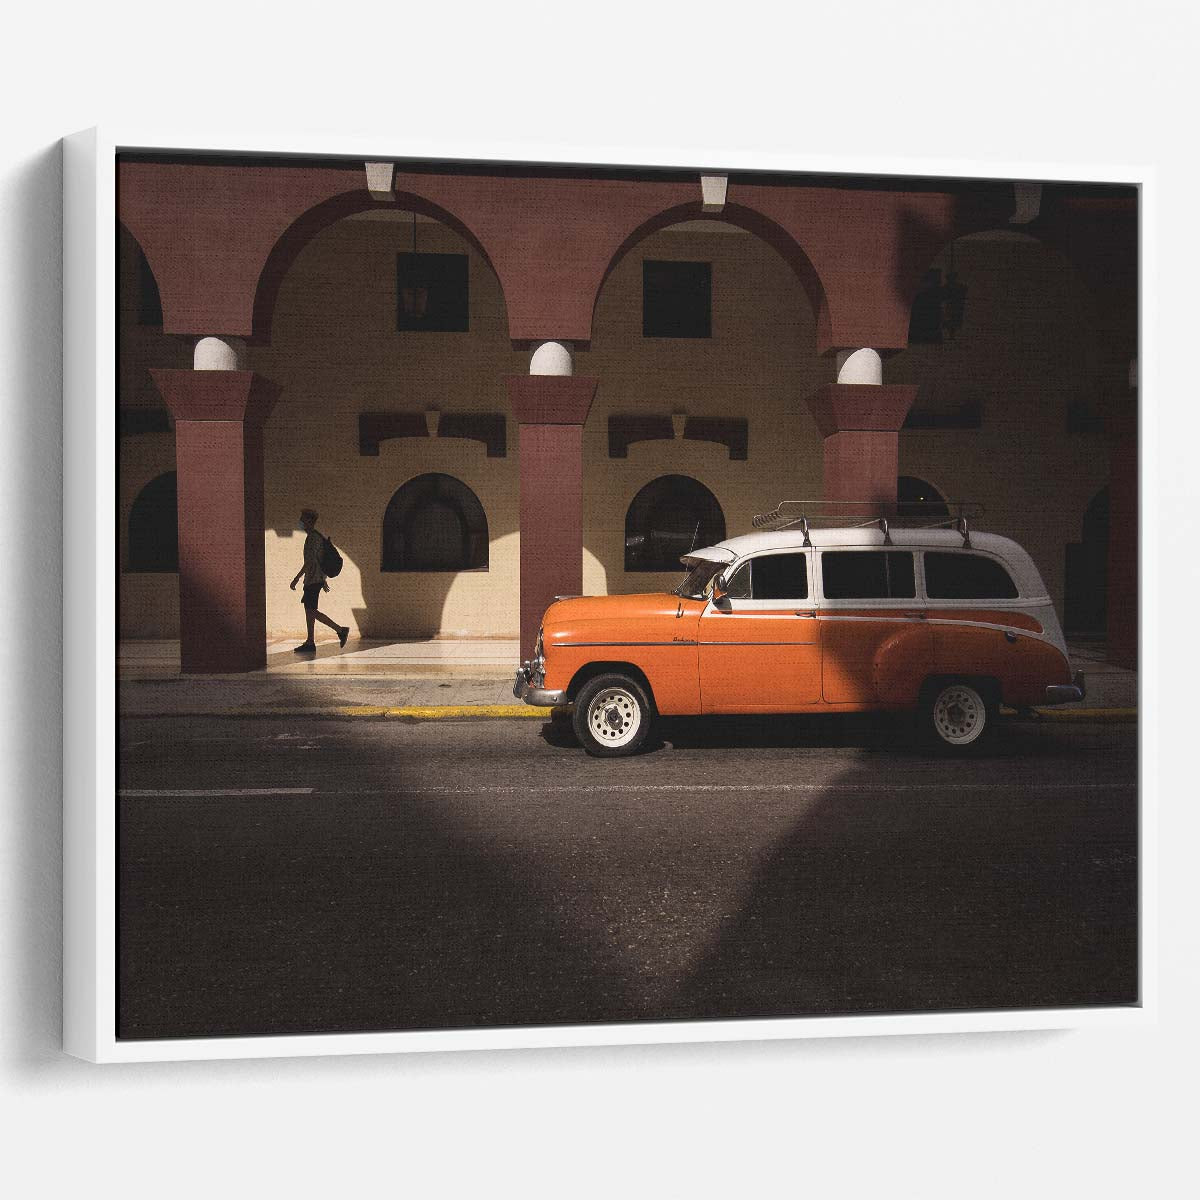 Havana Classic Car Urban Shadows Wall Art by Luxuriance Designs. Made in USA.